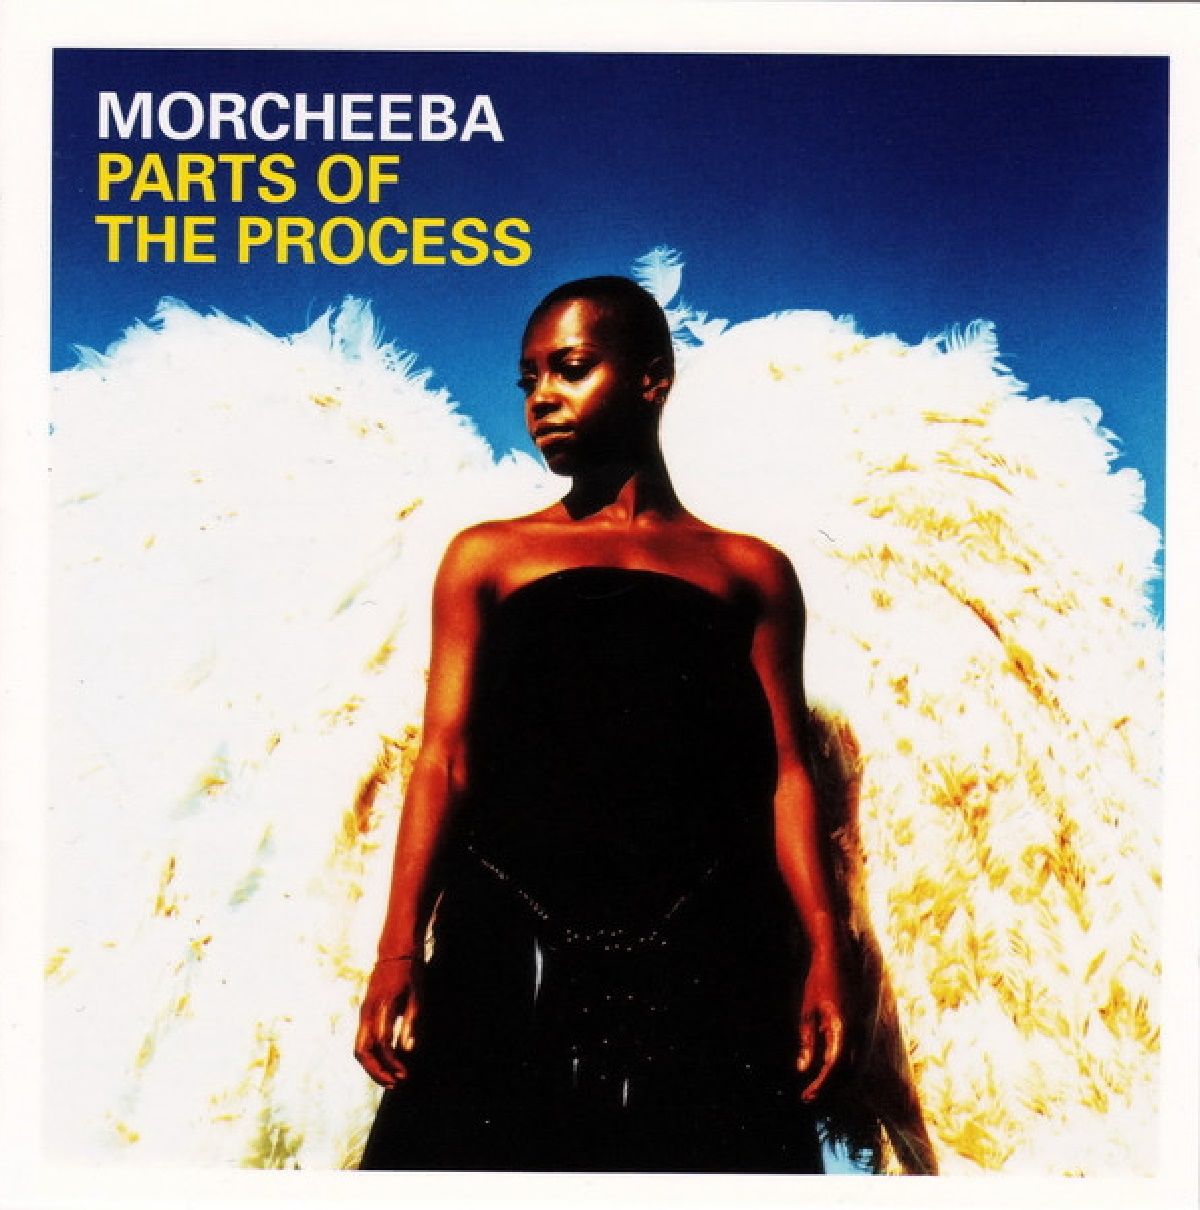 MORCHEEBA - PARTS OF THE PROCESS / THE VERY BEST OF MORCHEEBA (CD) (2003)